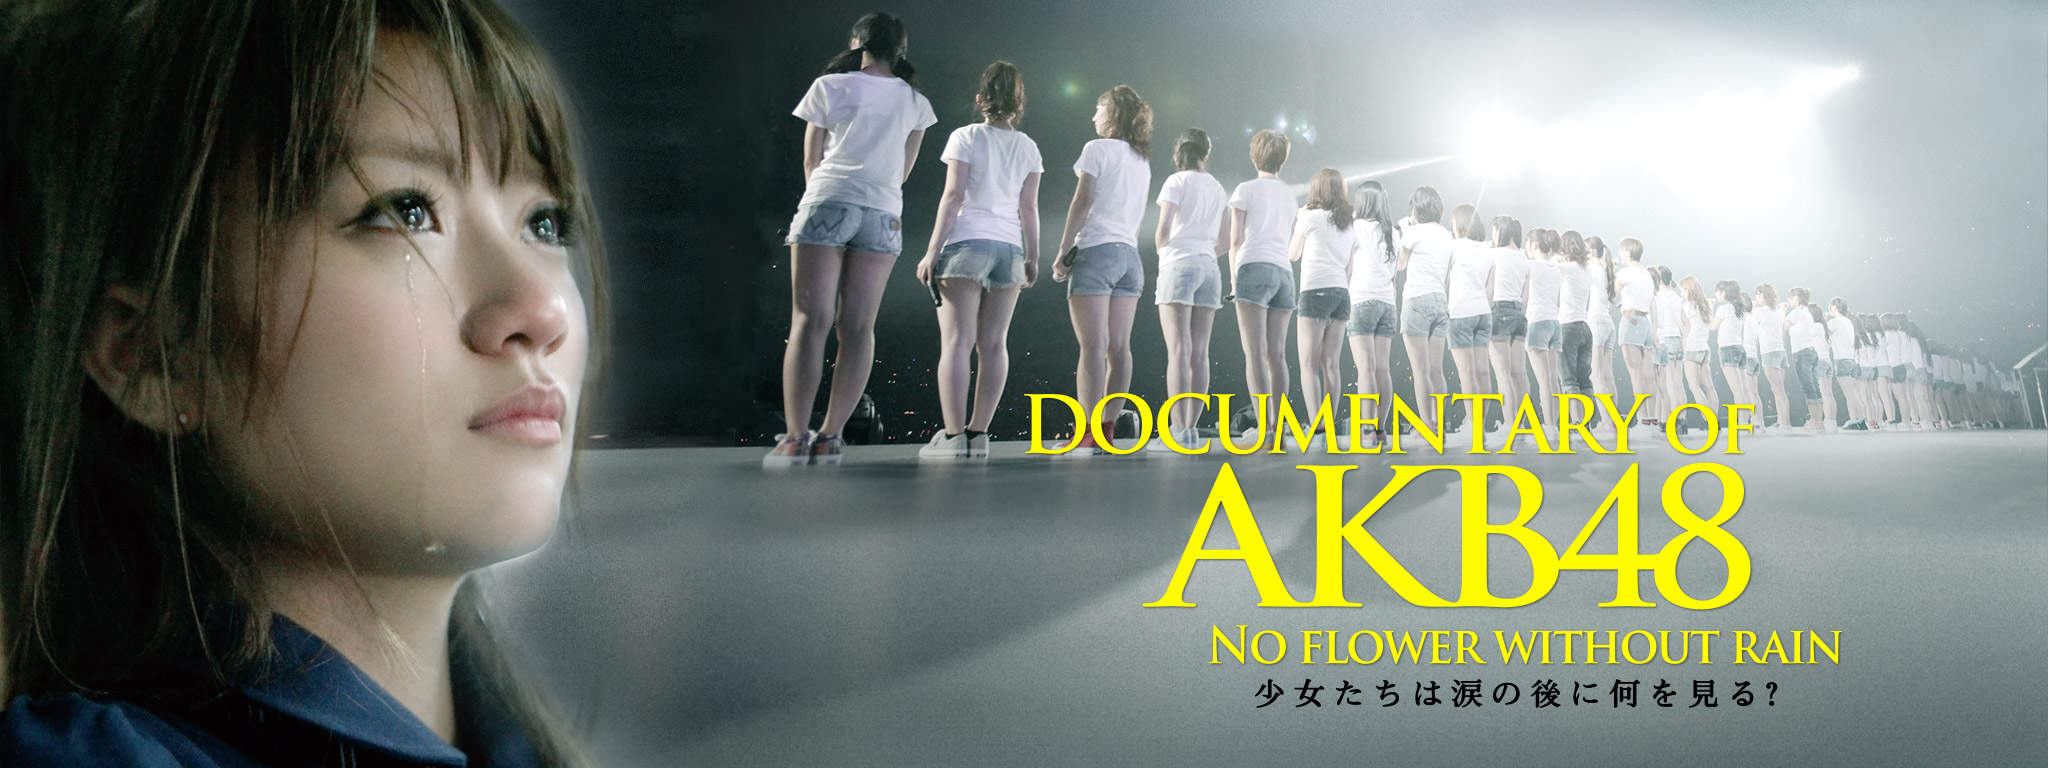 DOCUMENTARY of AKB48 NO FLOWER WITHOUT RAIN 少女たちは涙の後に何を 